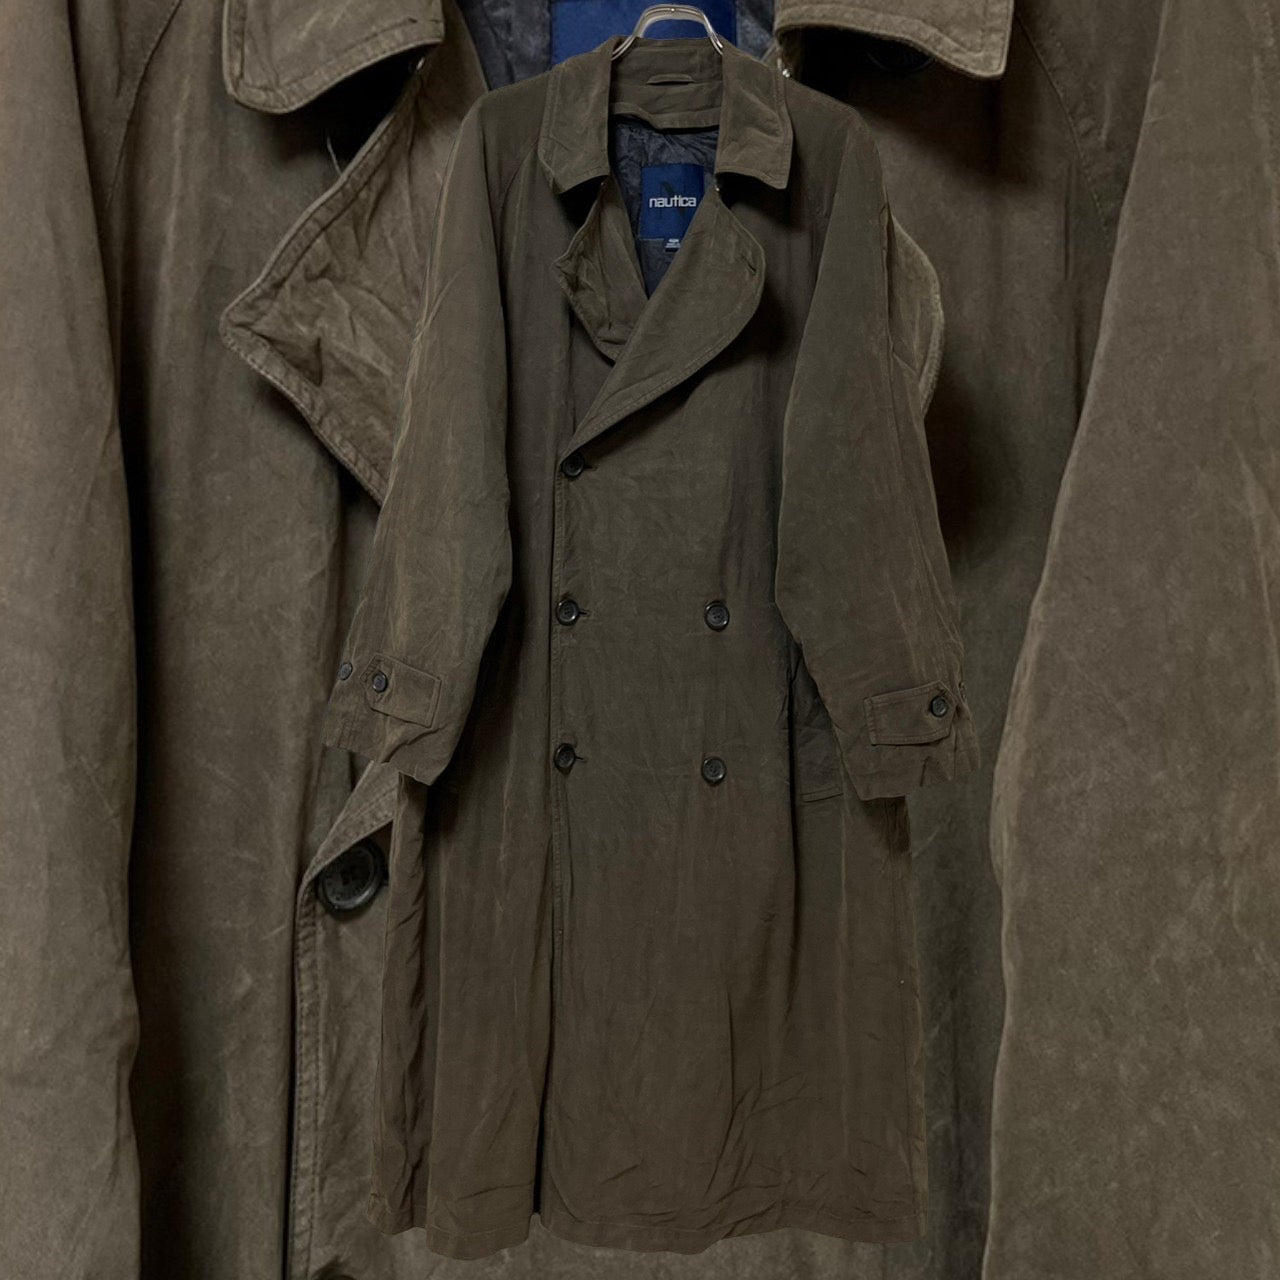 NAUTICA trench coat